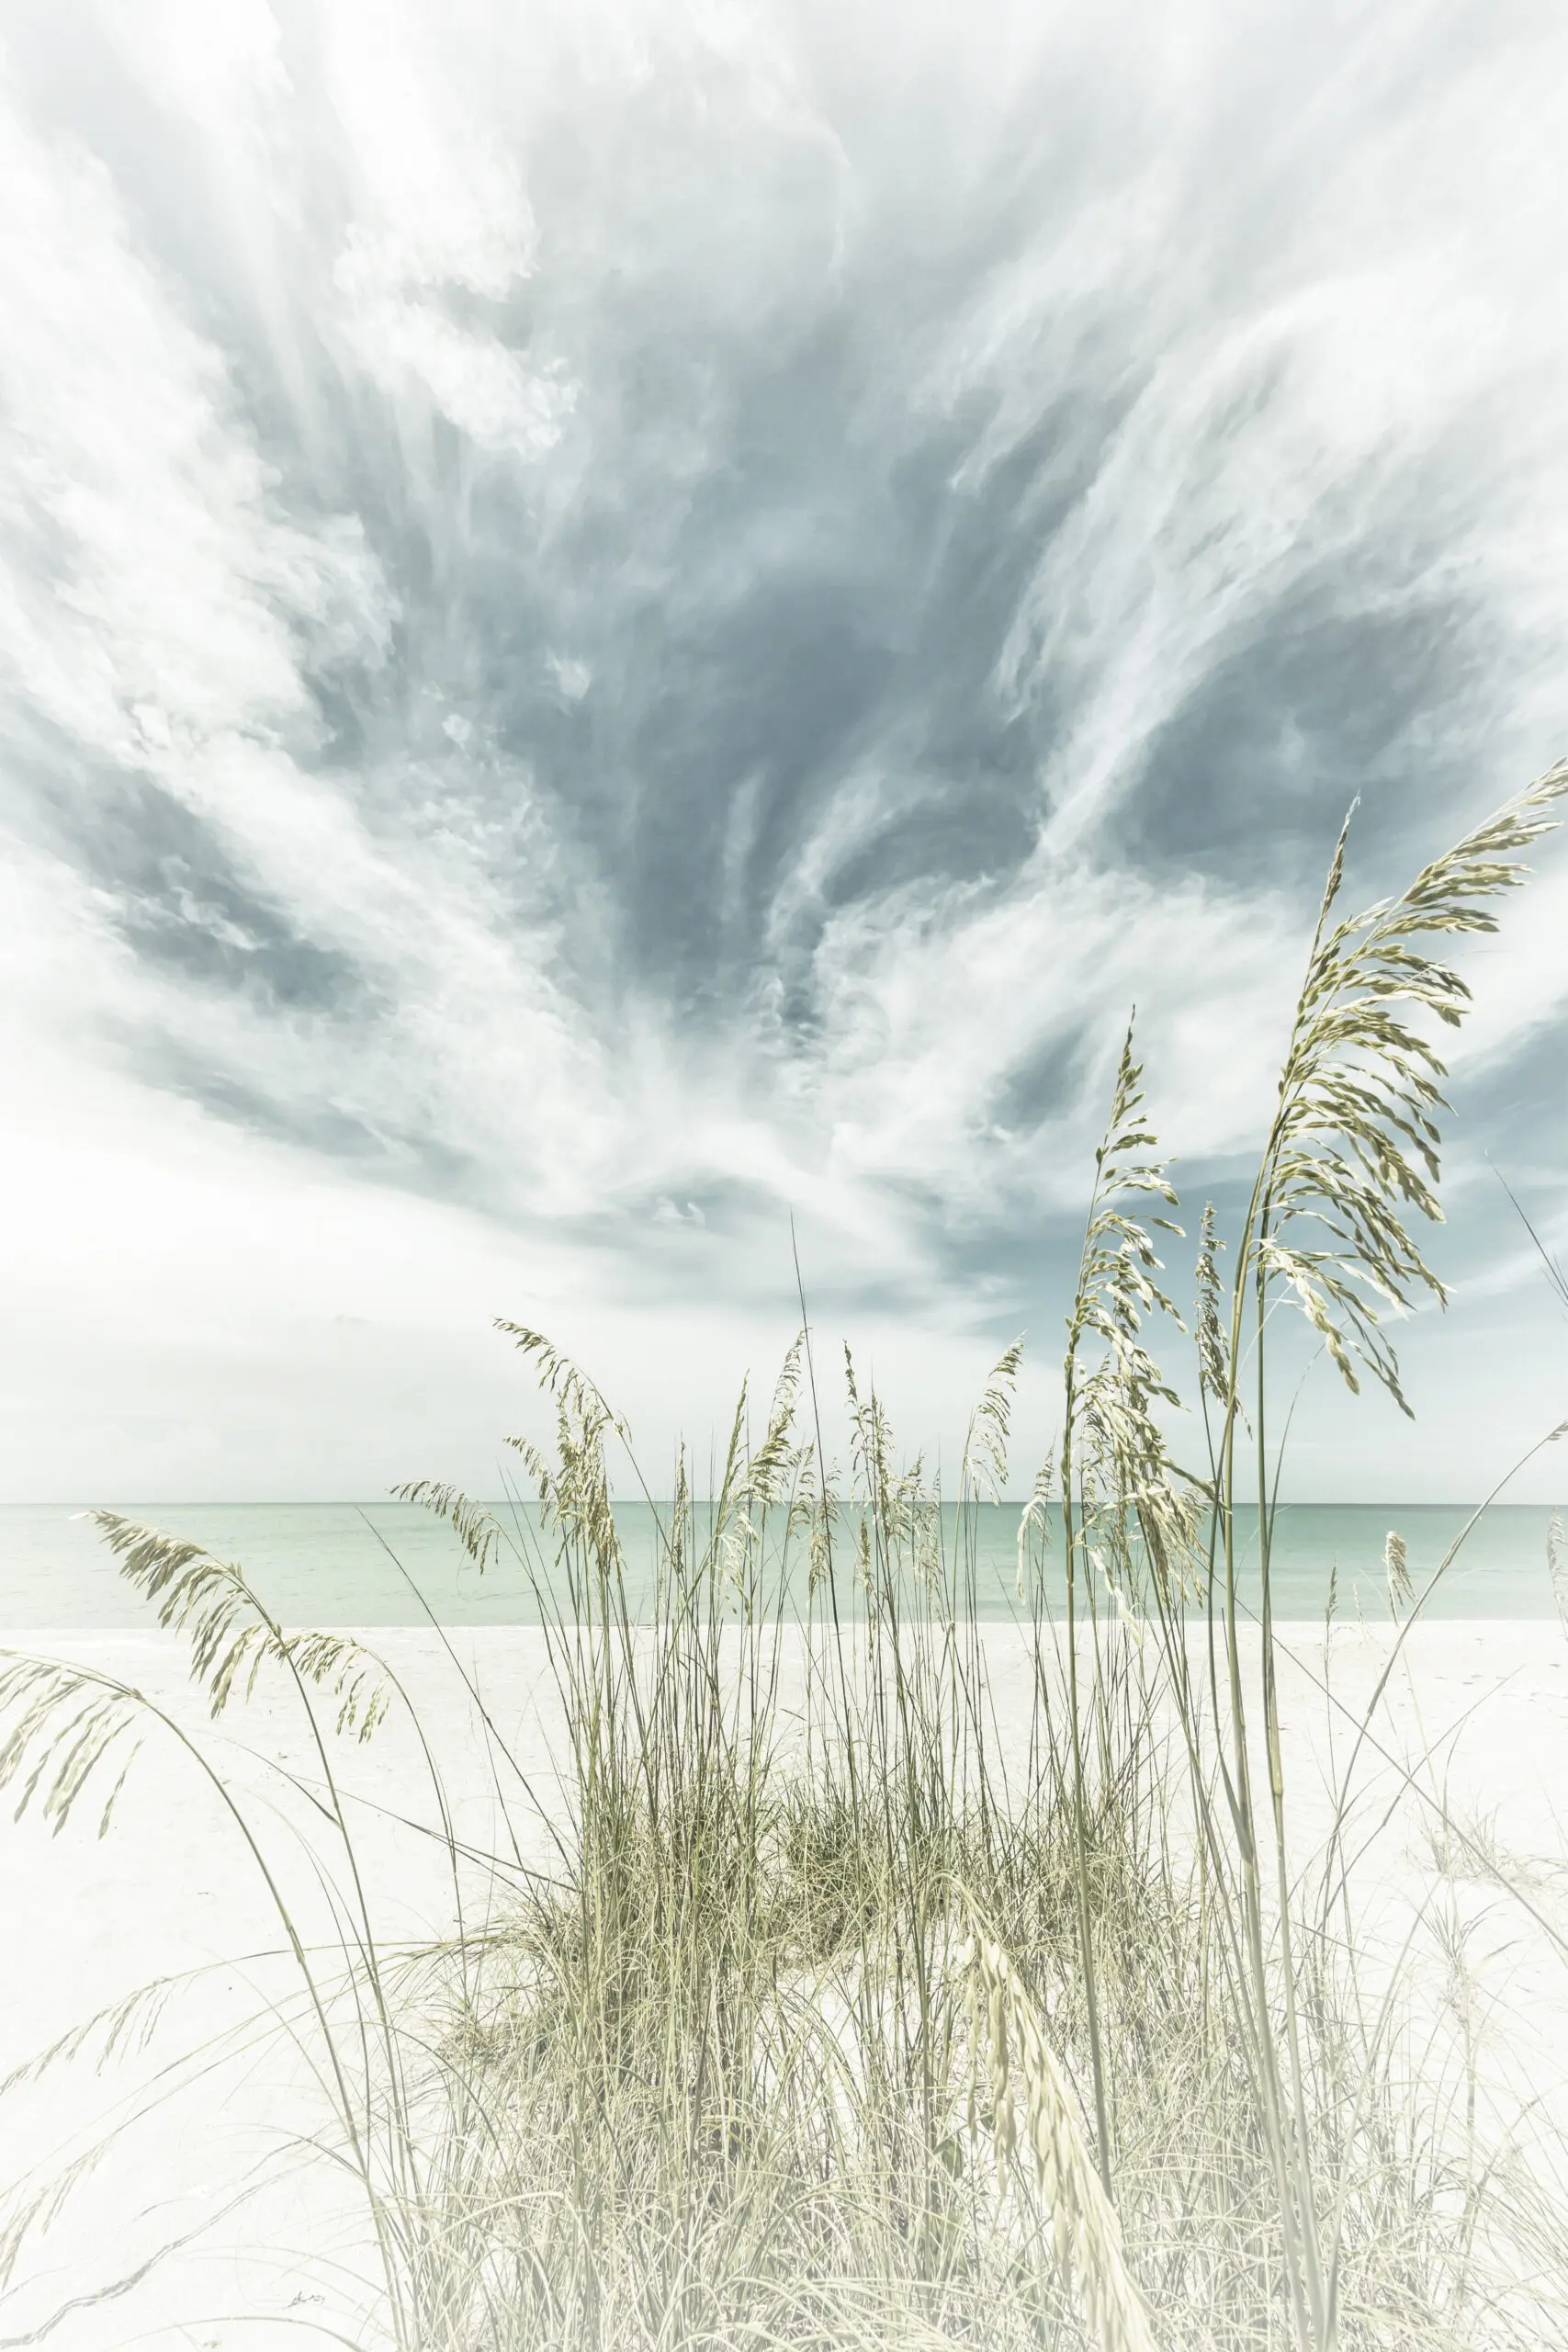 Wandbild (26037) Calmness on the beach by Melanie Viola präsentiert: Wasser,Natur